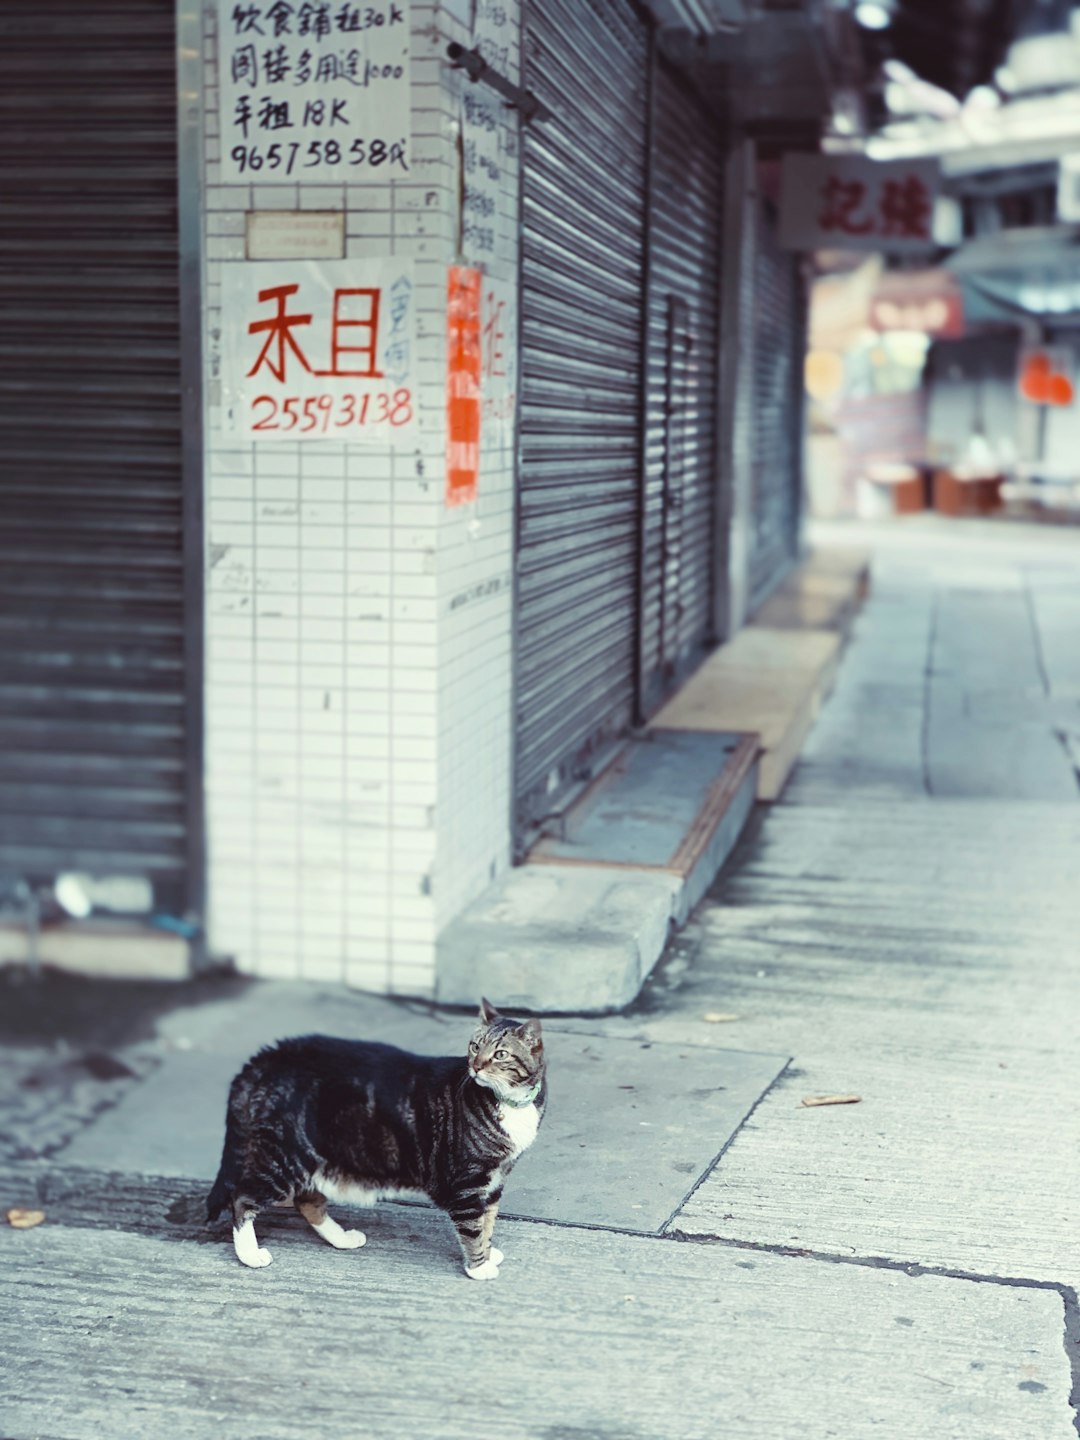 black and white cat on sidewalk